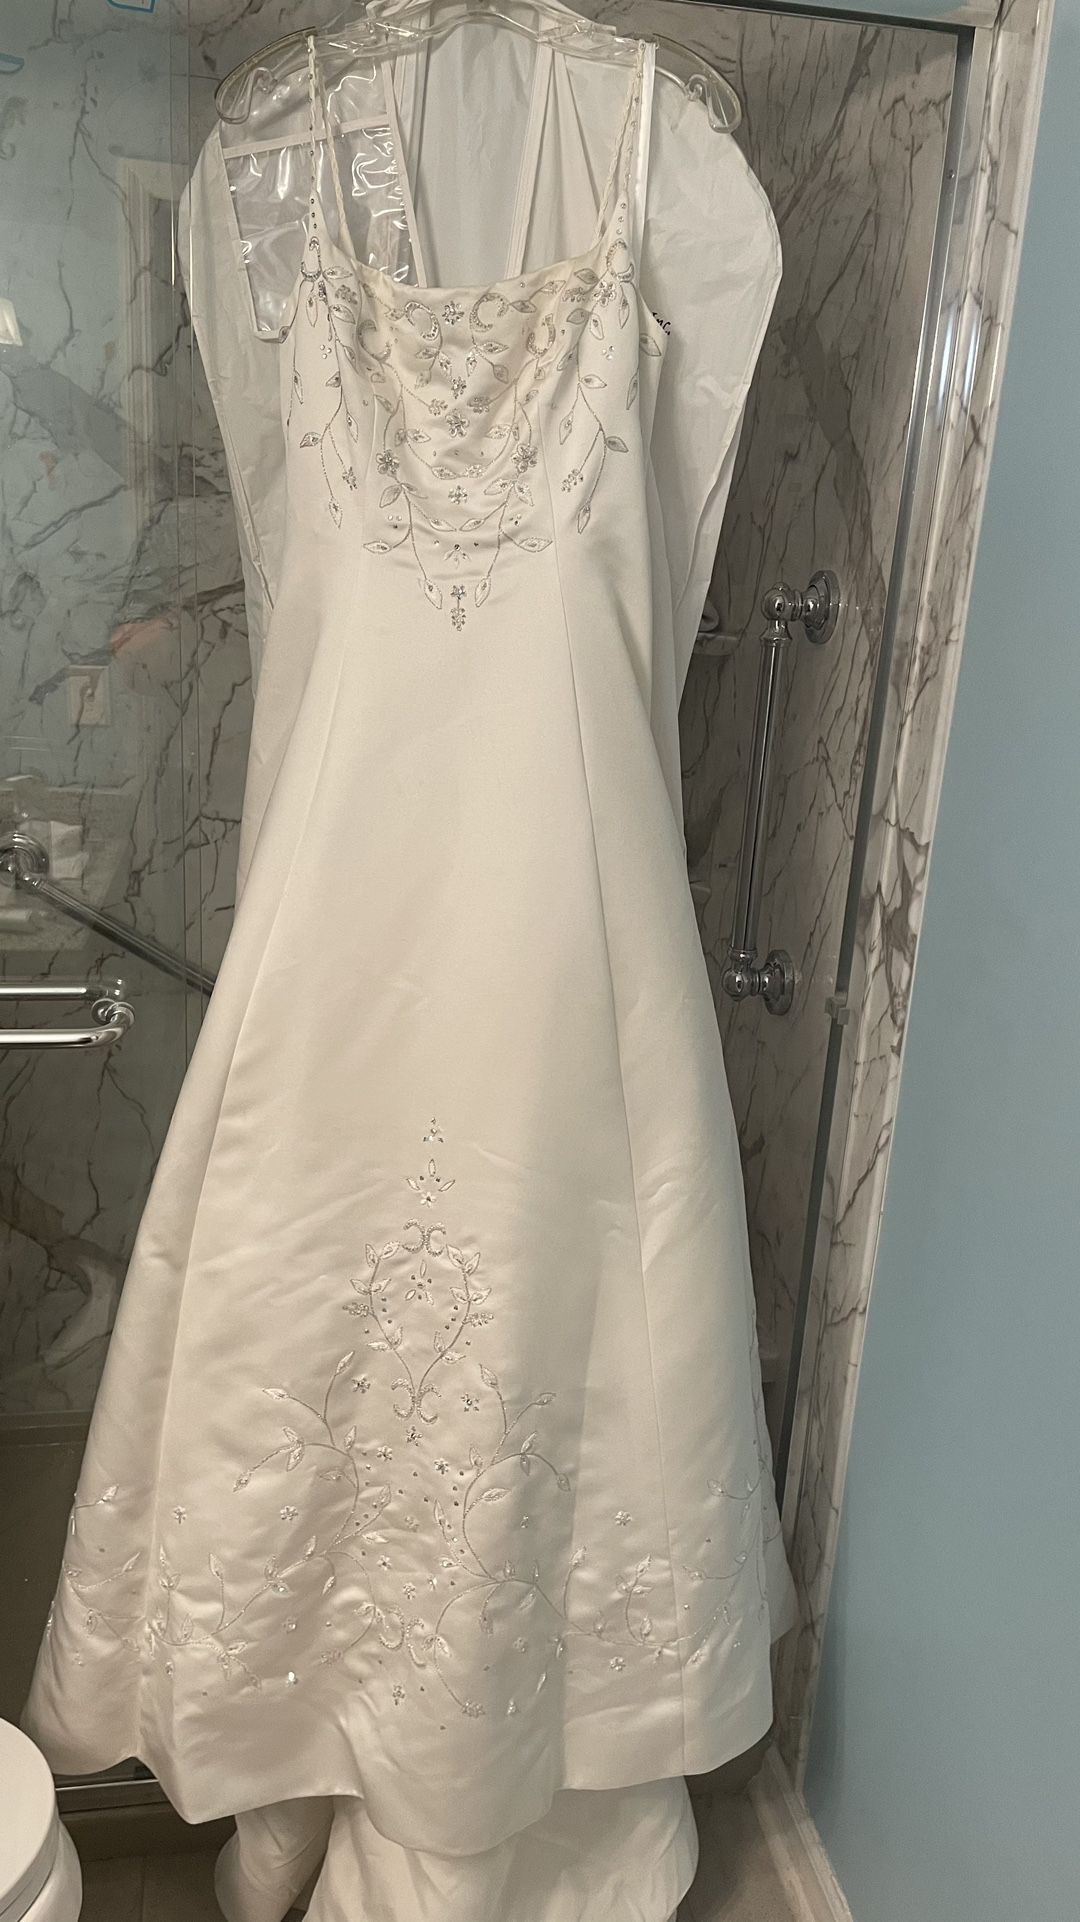 Cash Only! Wedding Dress Size 12